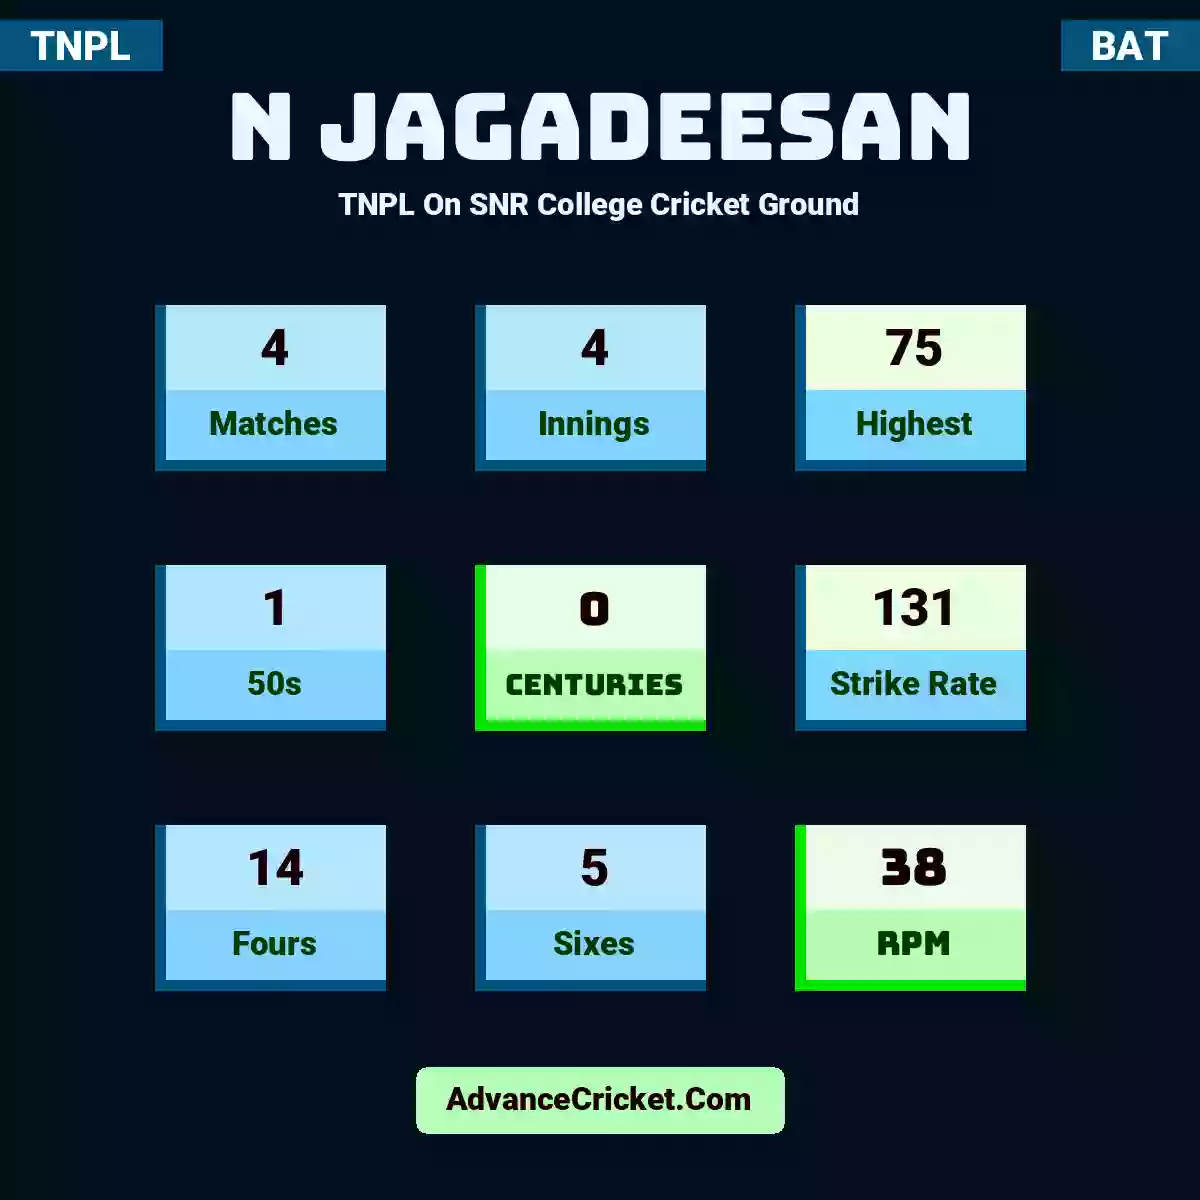 N Jagadeesan TNPL  On SNR College Cricket Ground, N Jagadeesan played 4 matches, scored 75 runs as highest, 1 half-centuries, and 0 centuries, with a strike rate of 131. N.Jagadeesan hit 14 fours and 5 sixes, with an RPM of 38.